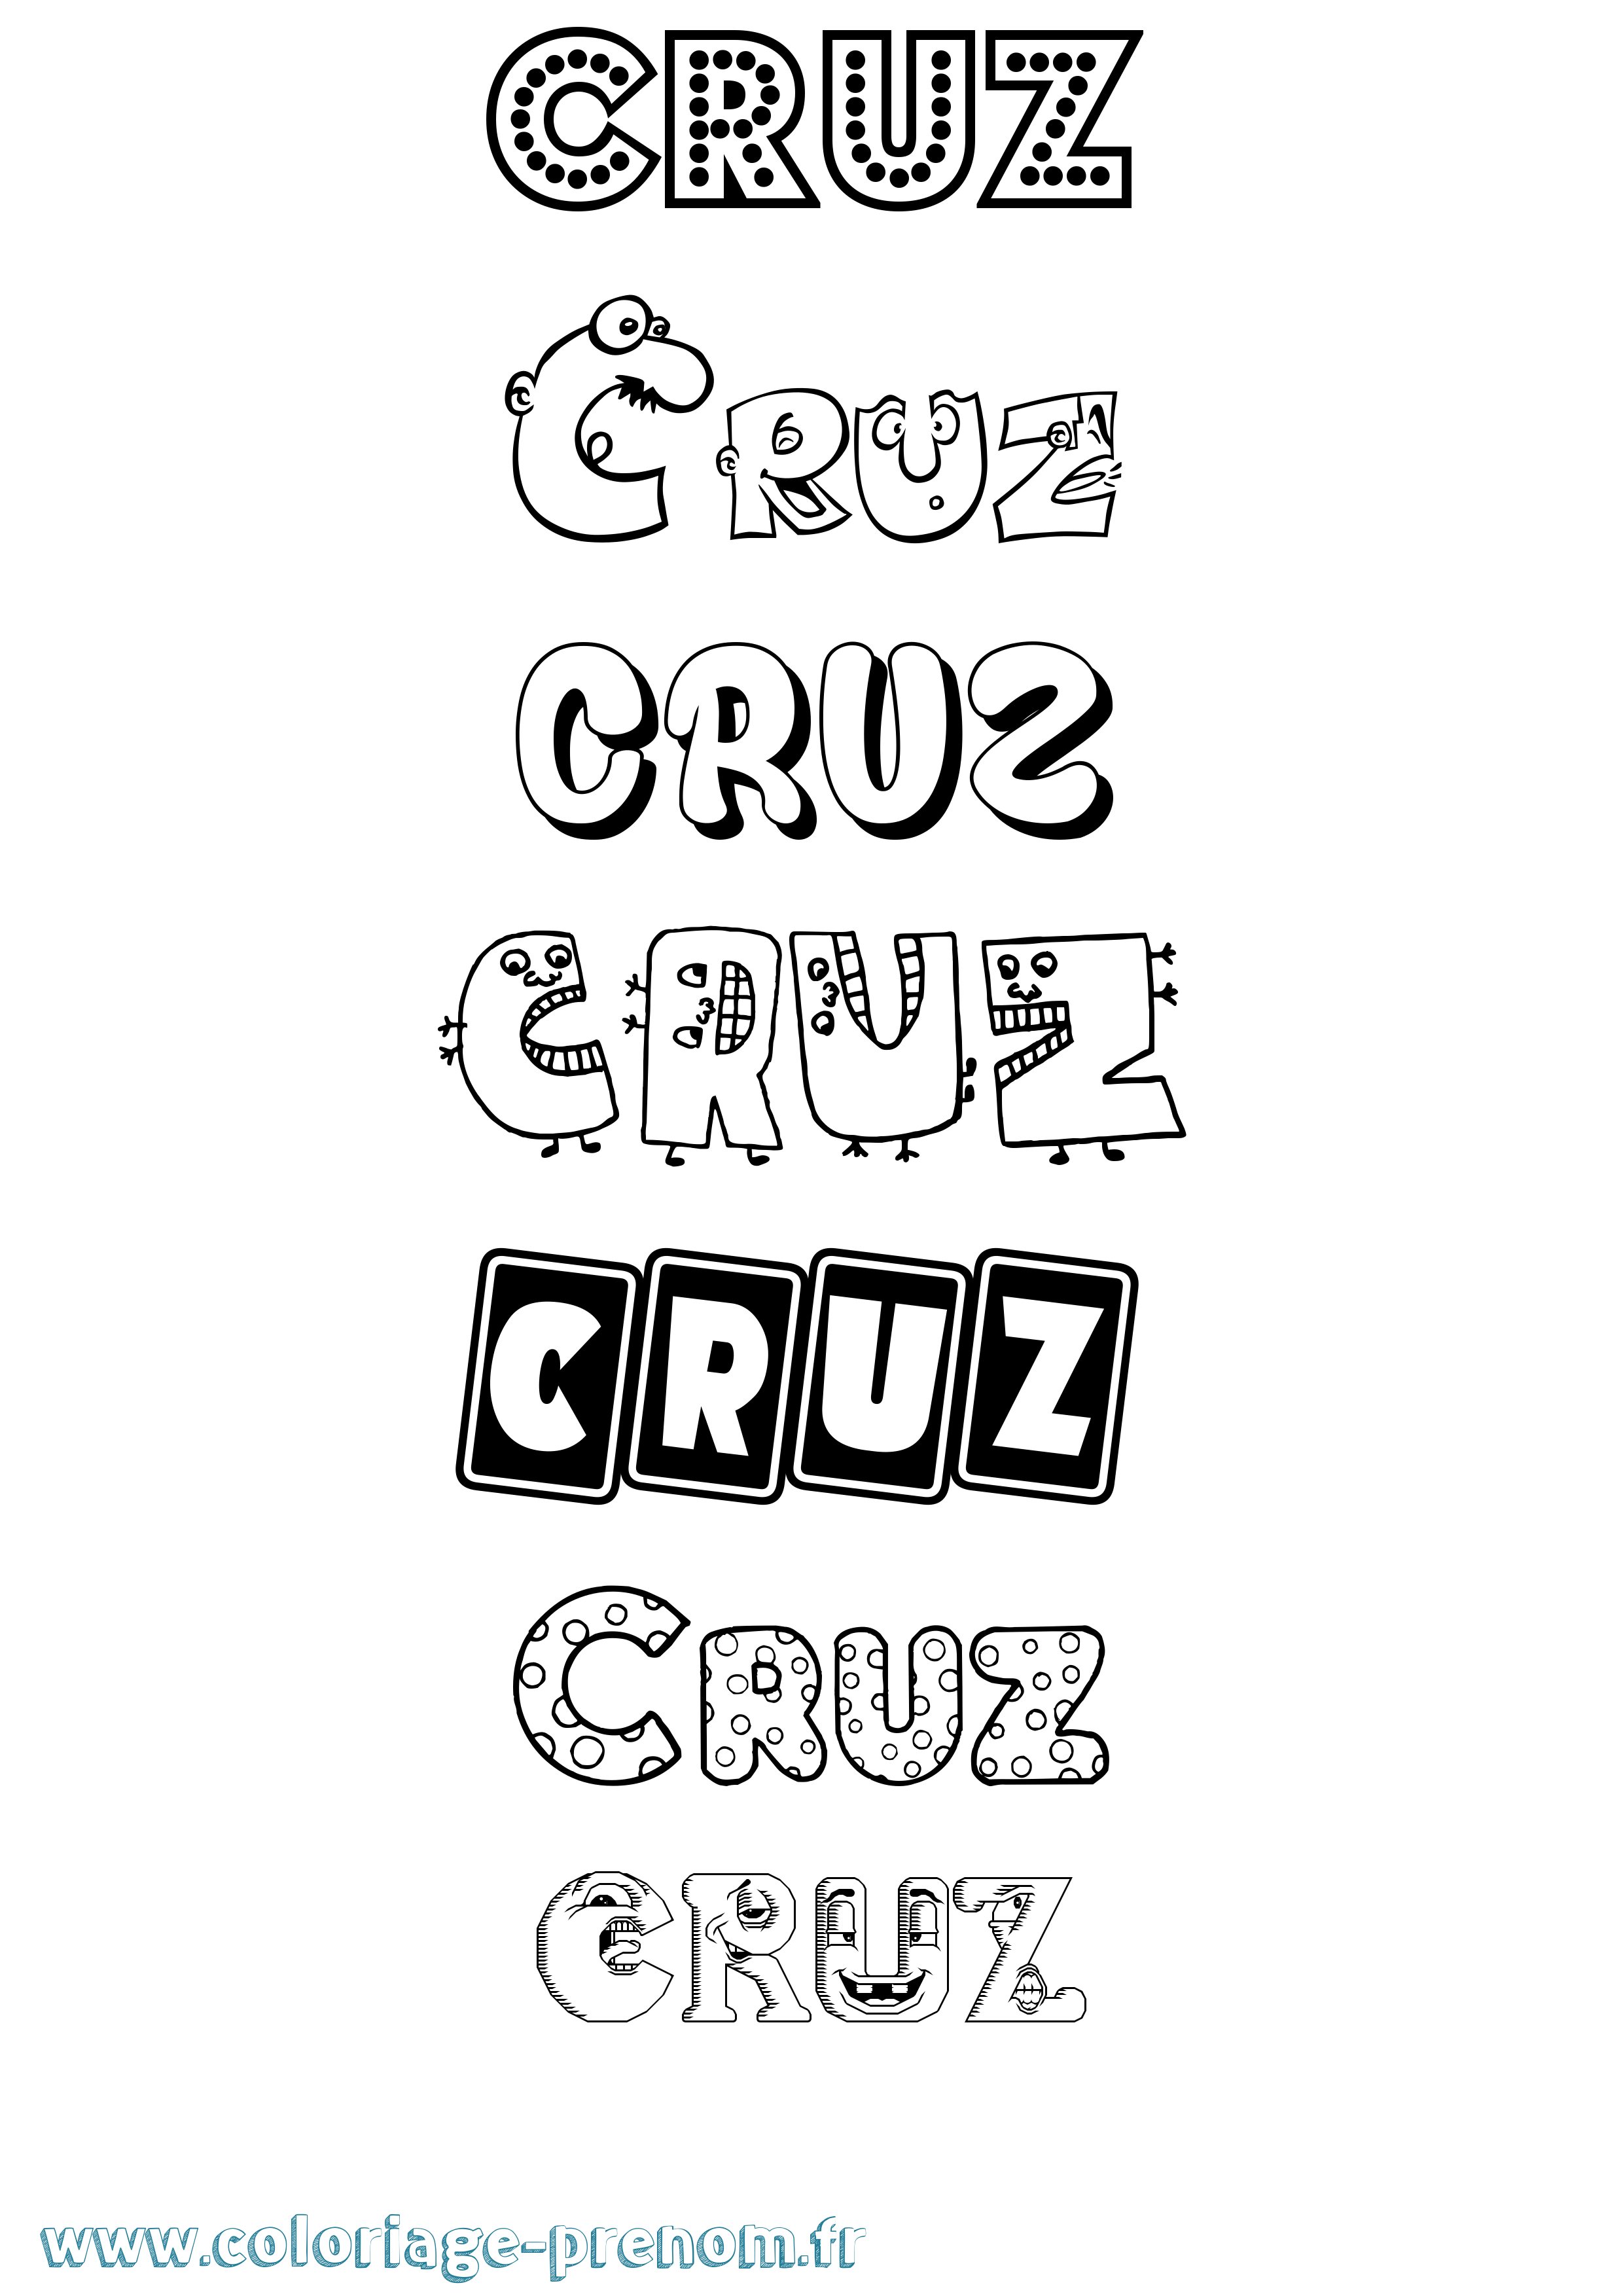 Coloriage prénom Cruz Fun